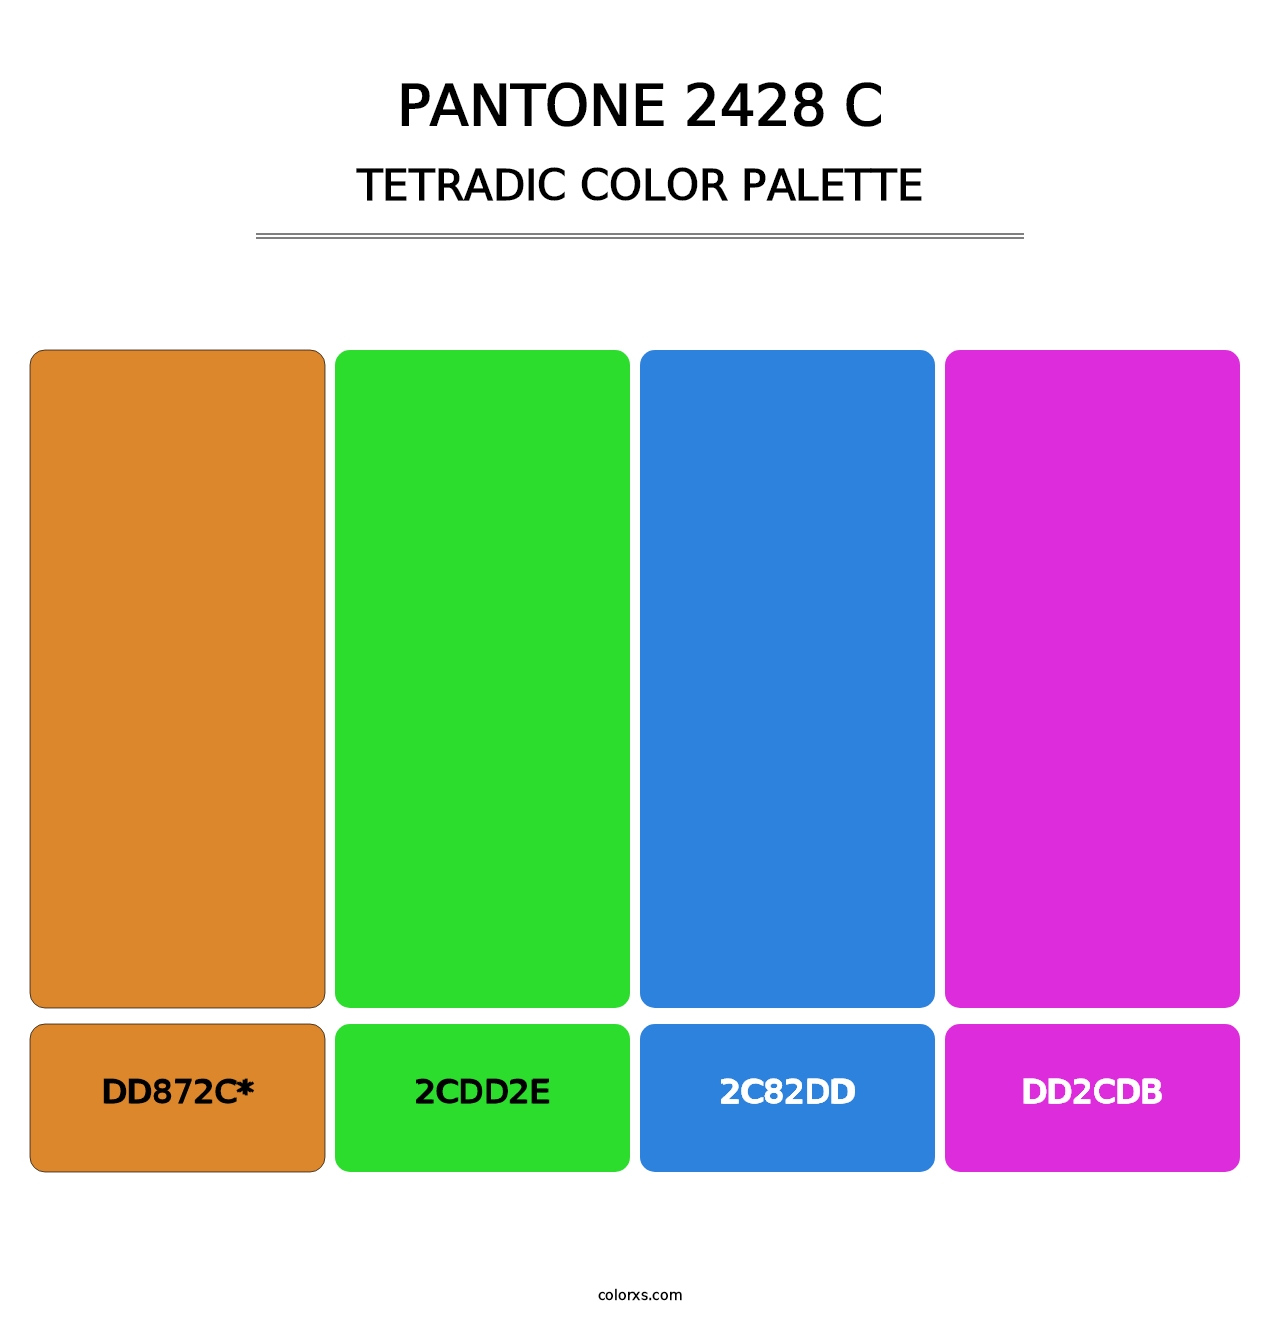 PANTONE 2428 C - Tetradic Color Palette